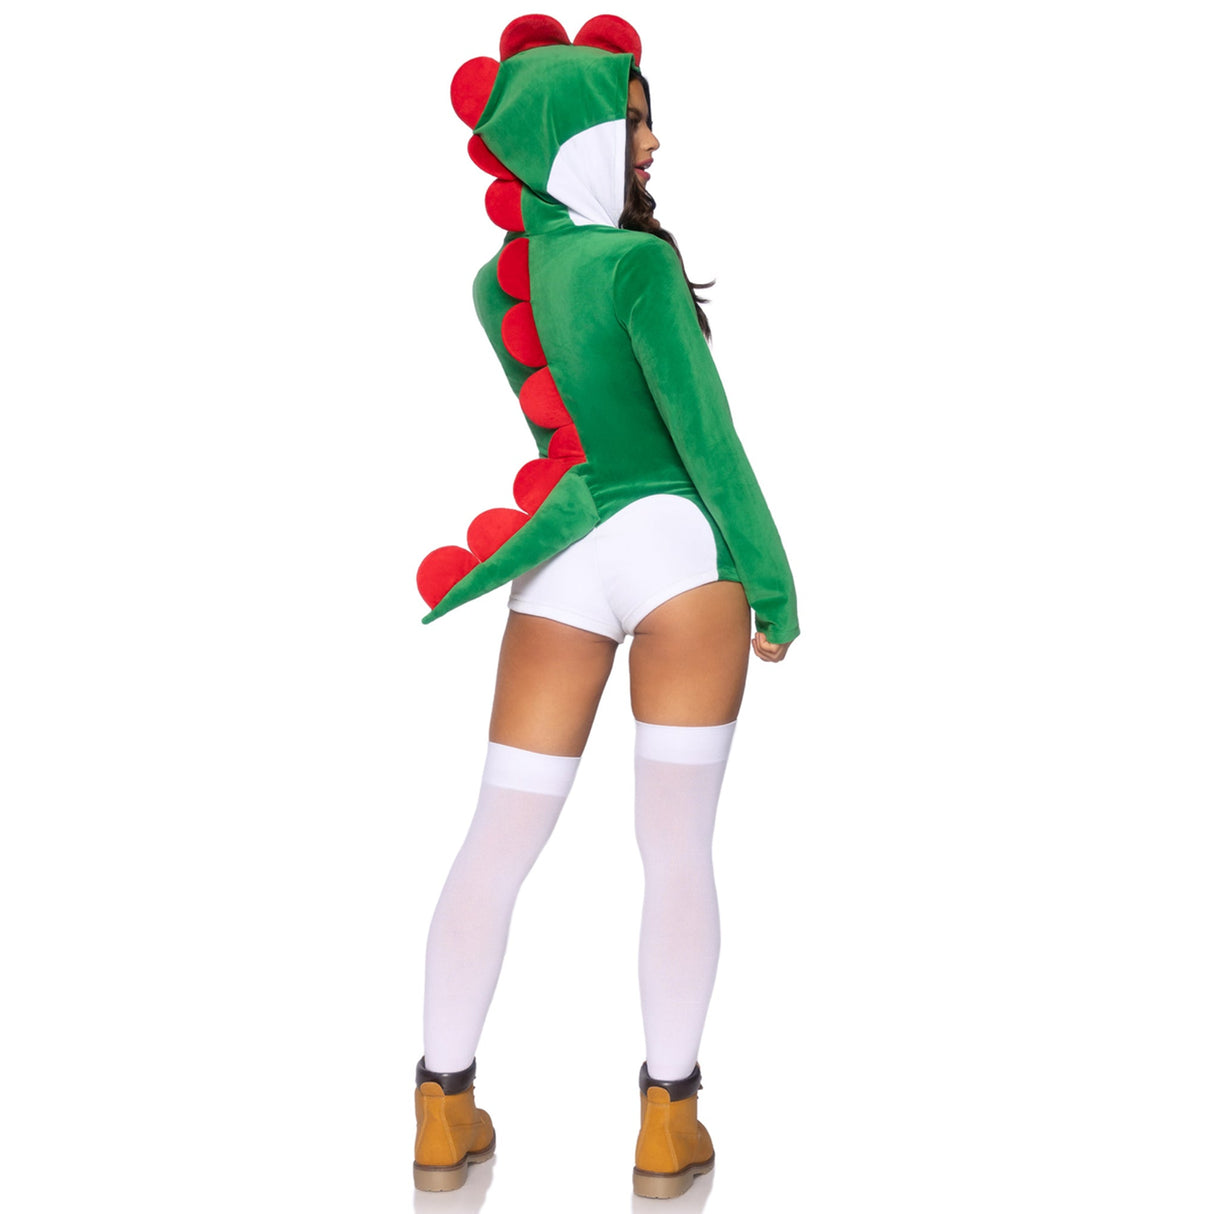 LEG AVENUE/SKU DISTRIBUTORS INC Costumes Super Dino Sexy Costume for Adults, Green Romper